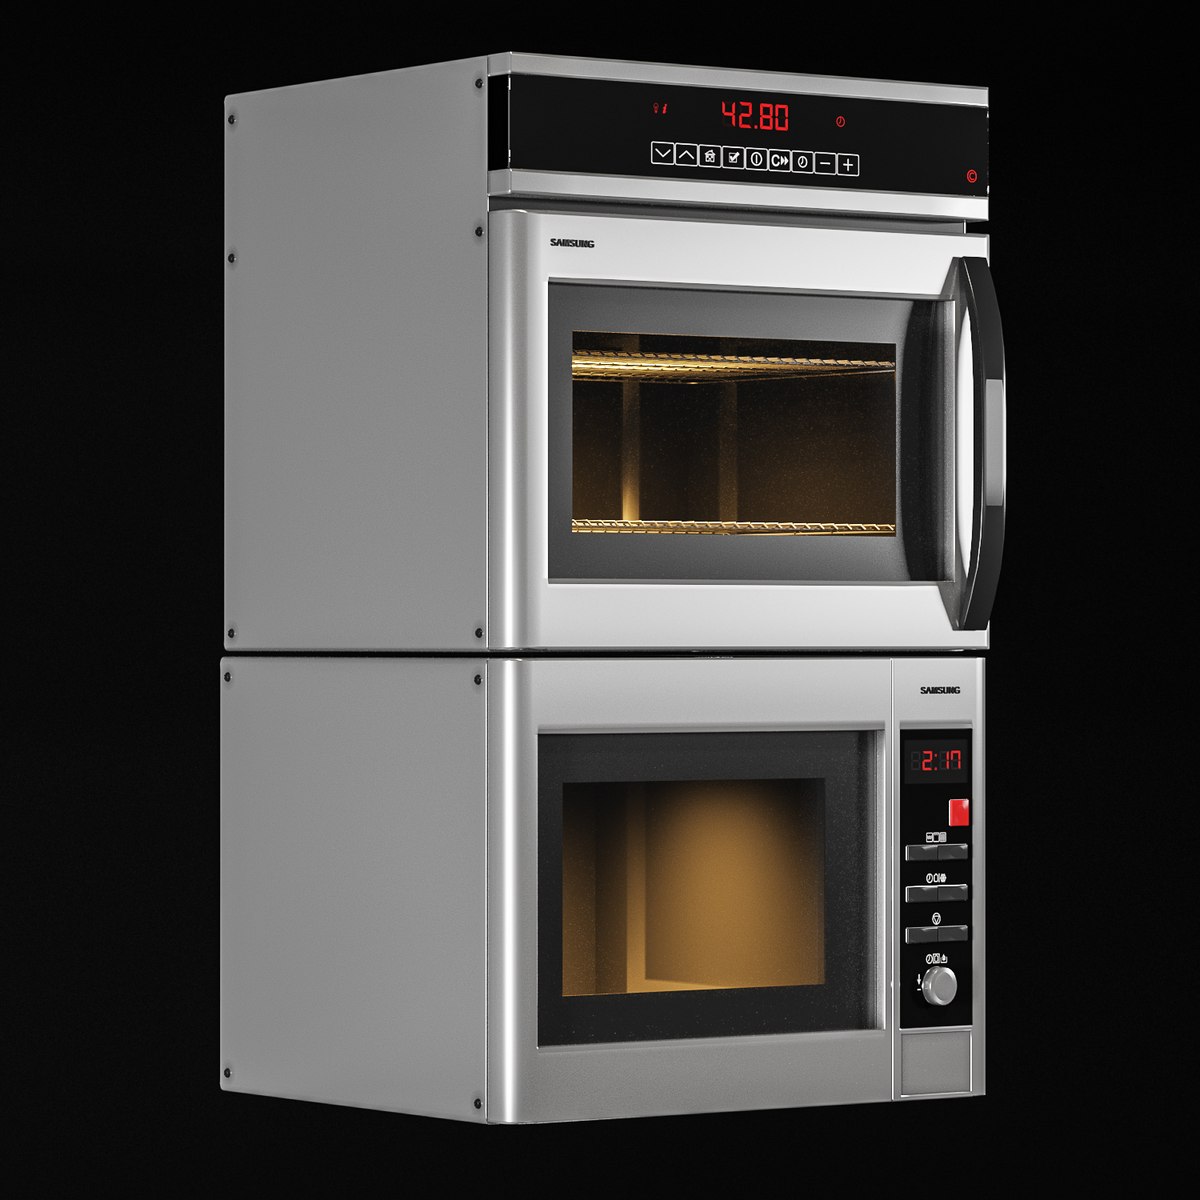 https://3dbrute.com/wp-content/uploads/full/2023/01/kitchen-appliance-set-01-preview-03.jpg